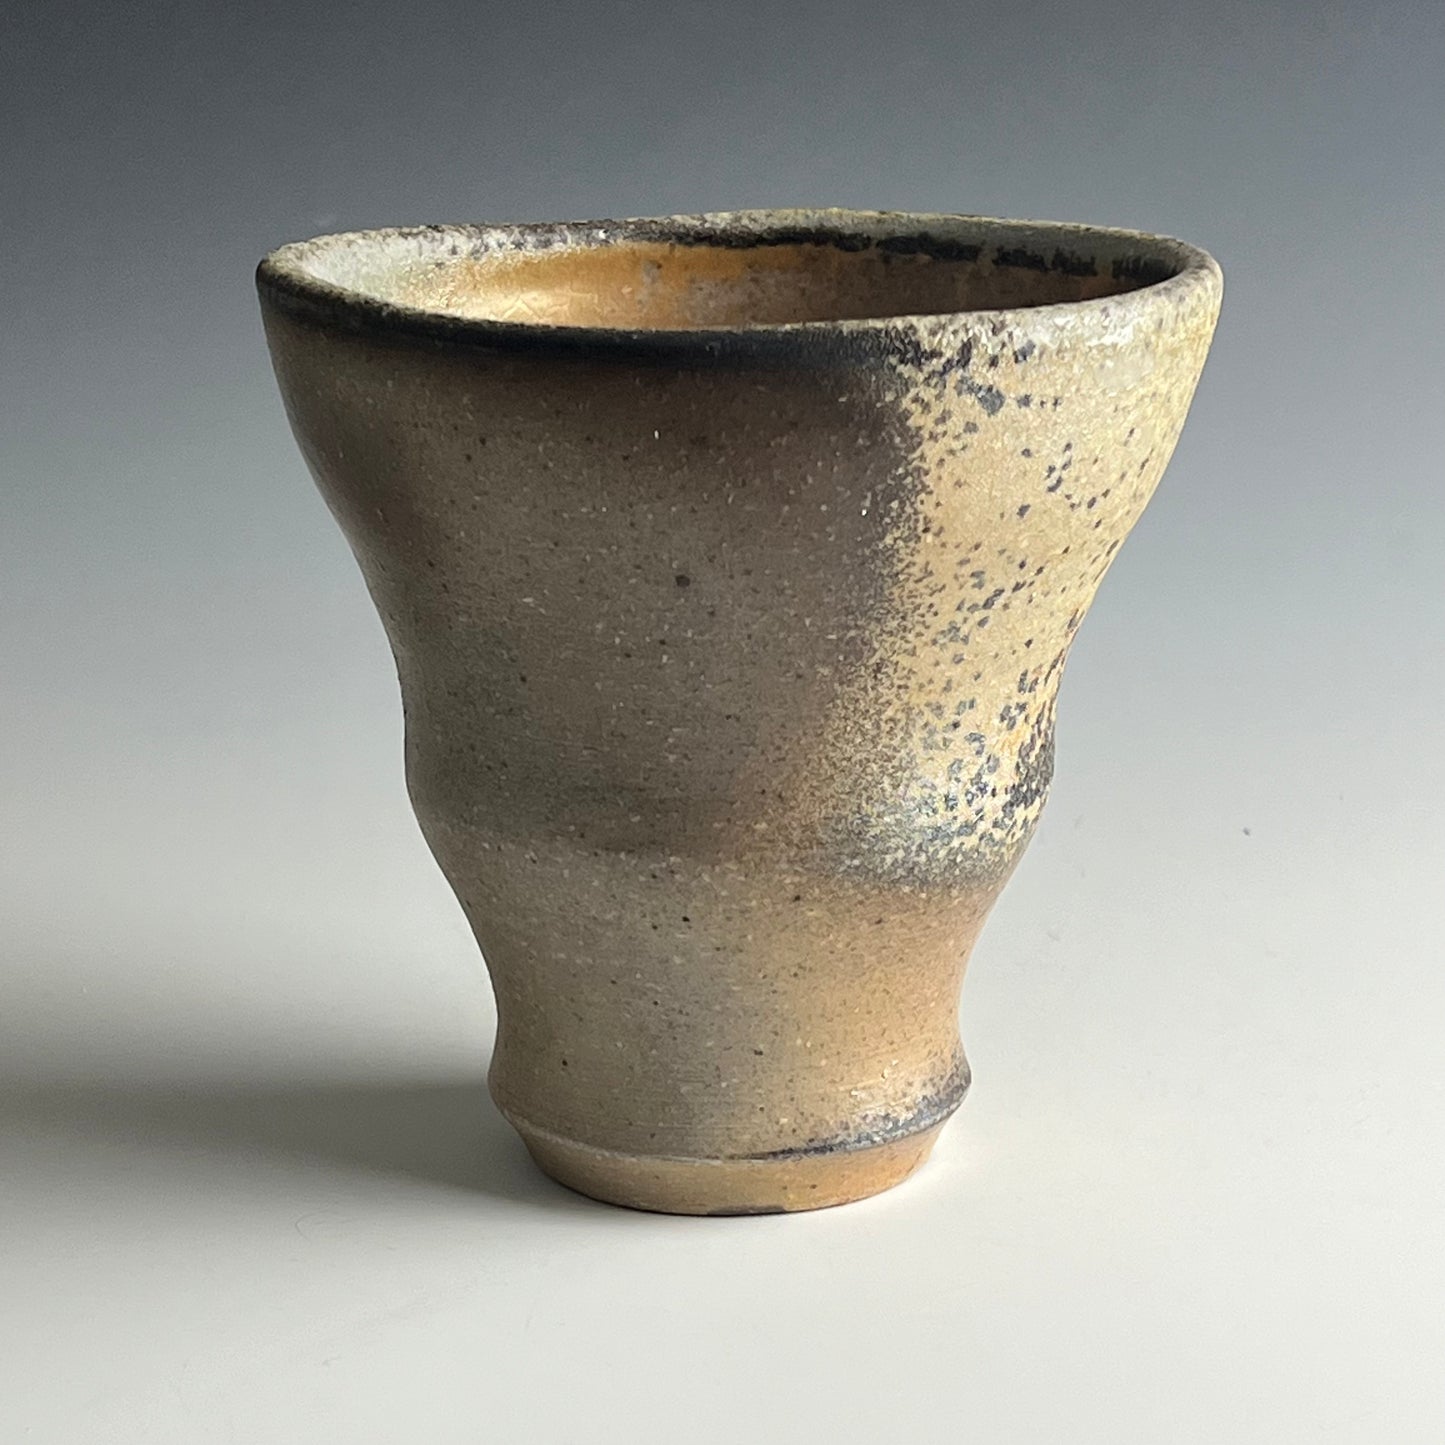 Reduction cooled vase